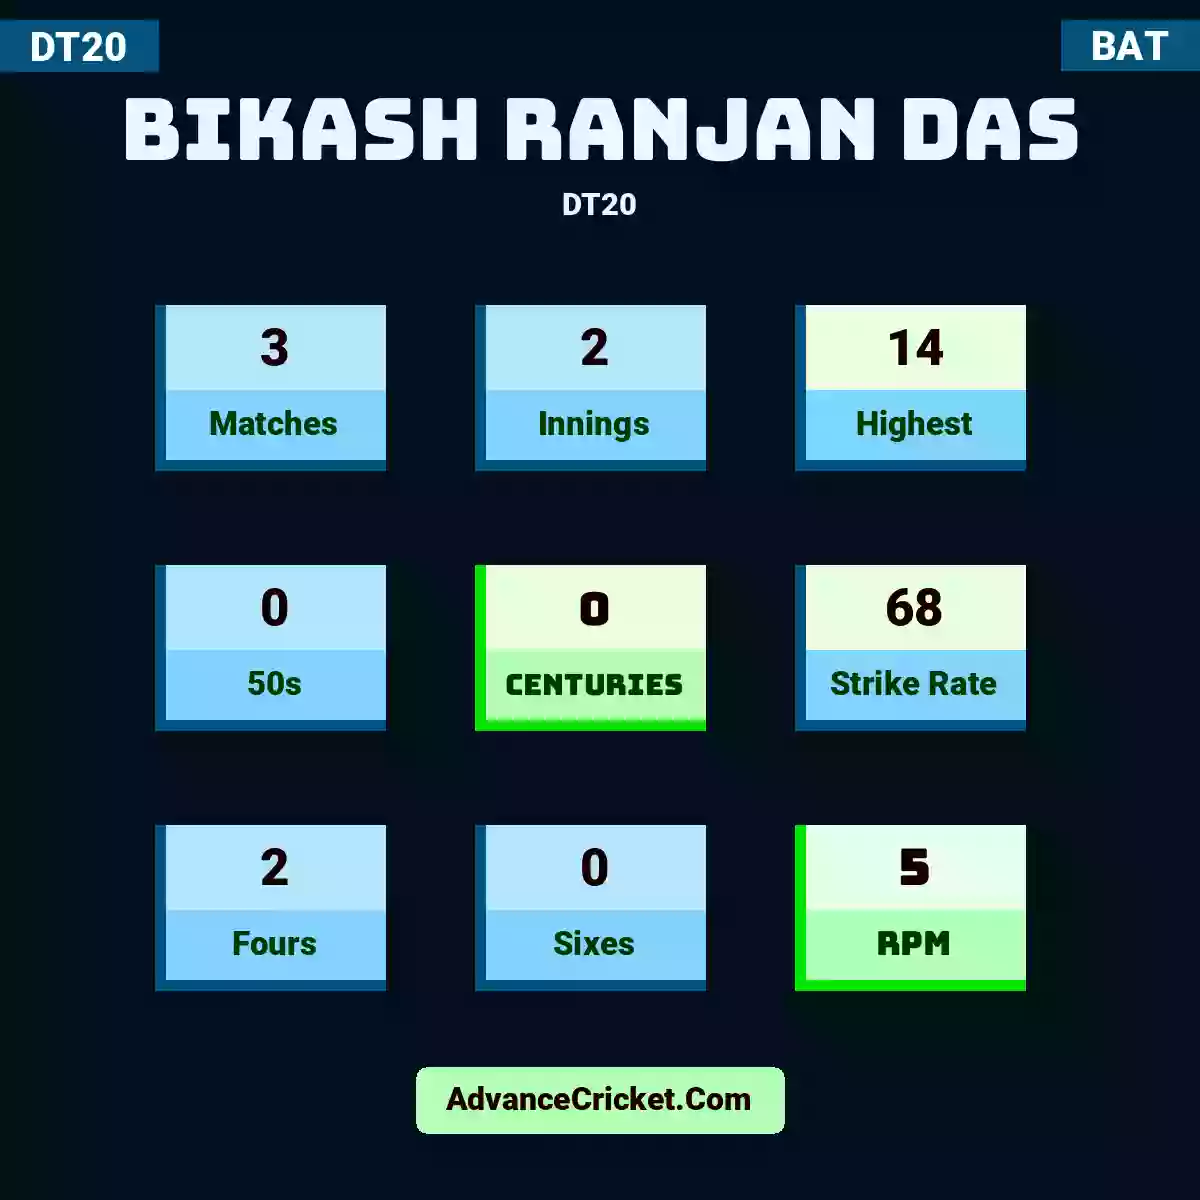 Bikash Ranjan Das DT20 , Bikash Ranjan Das played 3 matches, scored 14 runs as highest, 0 half-centuries, and 0 centuries, with a strike rate of 68. b.ranjan.das hit 2 fours and 0 sixes, with an RPM of 5.